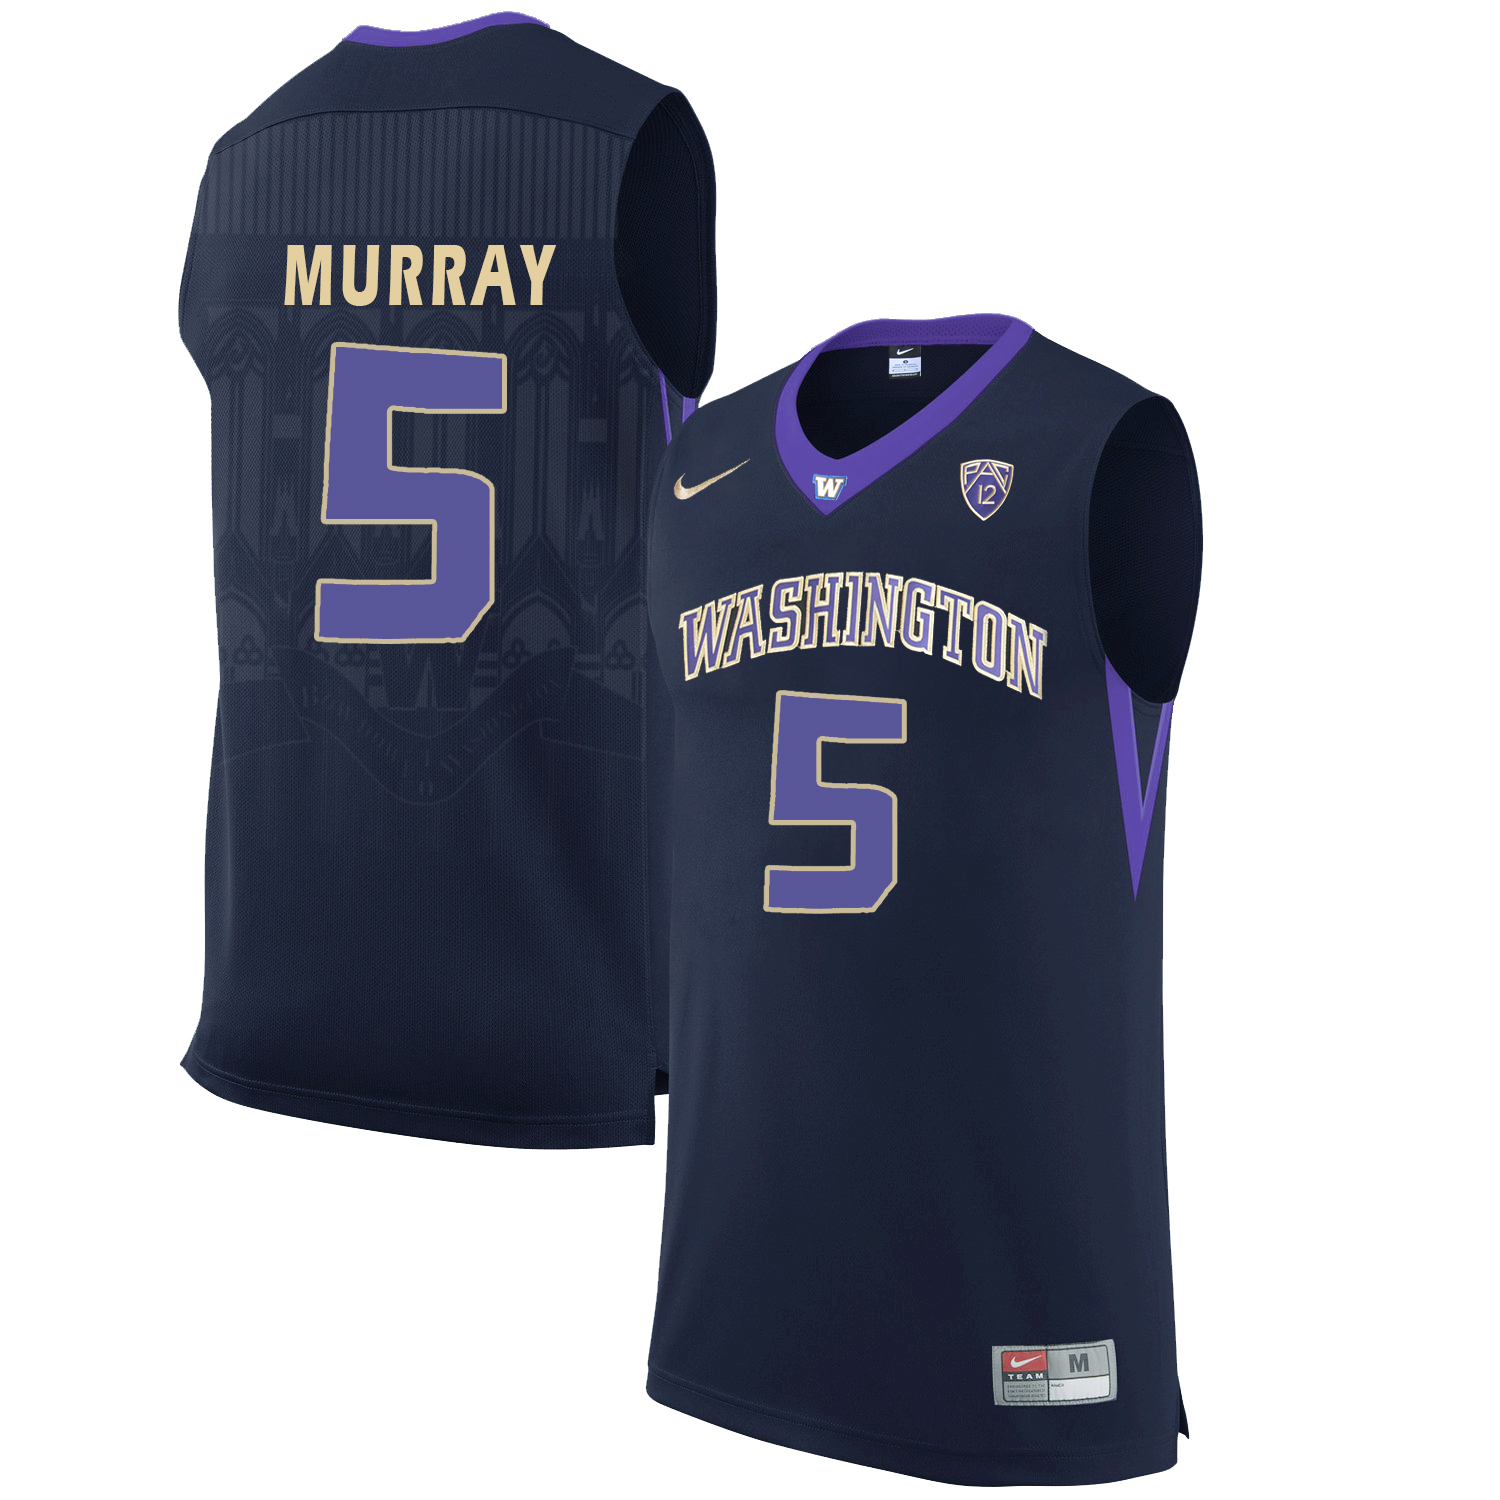 Washington Huskies 5 Dejounte Murray Black College Basketball Jersey